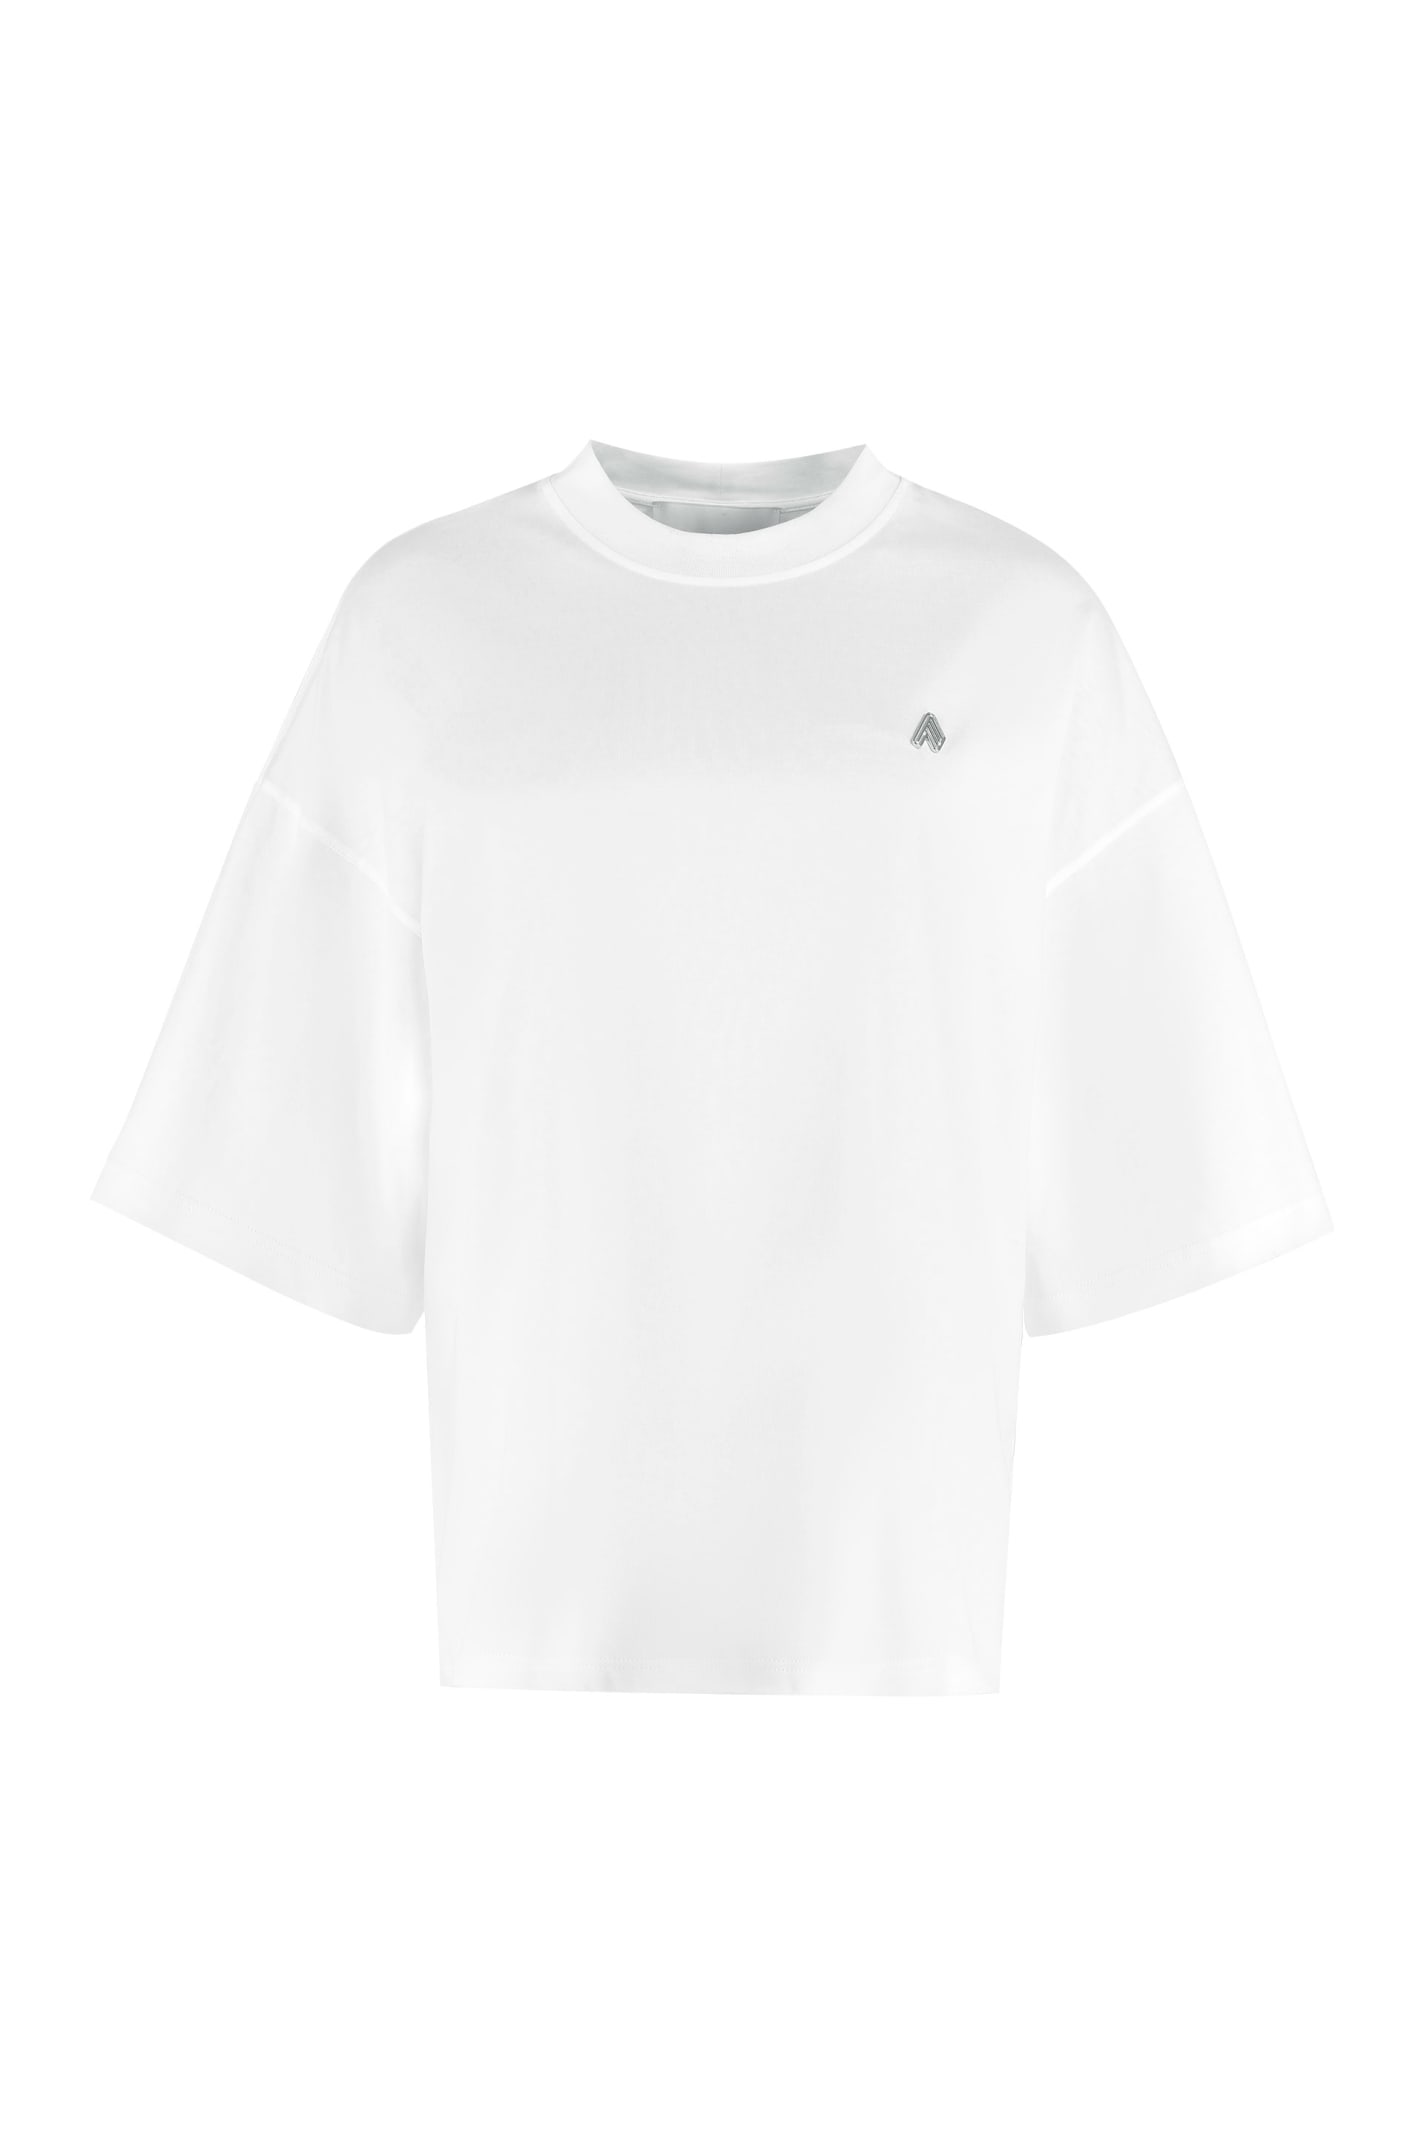 The Attico Cara Cotton T-shirt